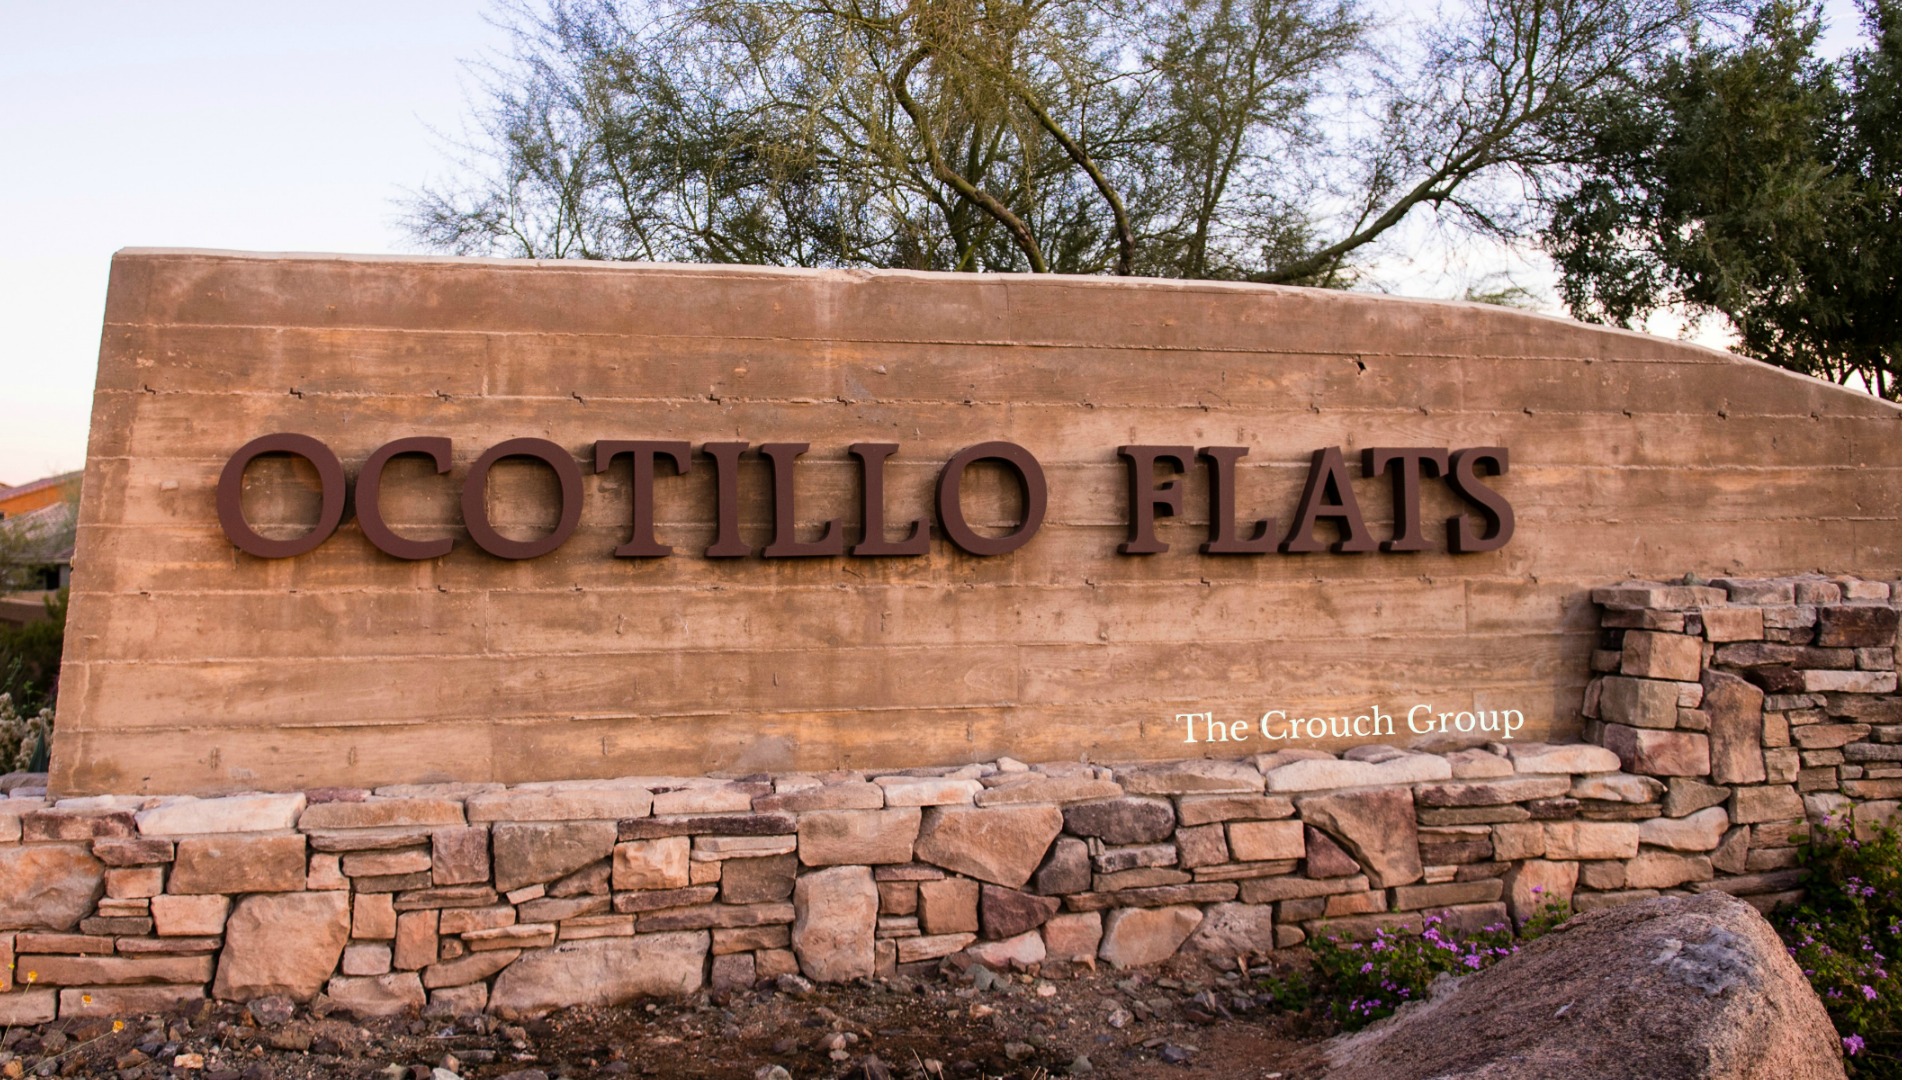 Ocotillo Flats entrance sign for homes Fireside Norterra